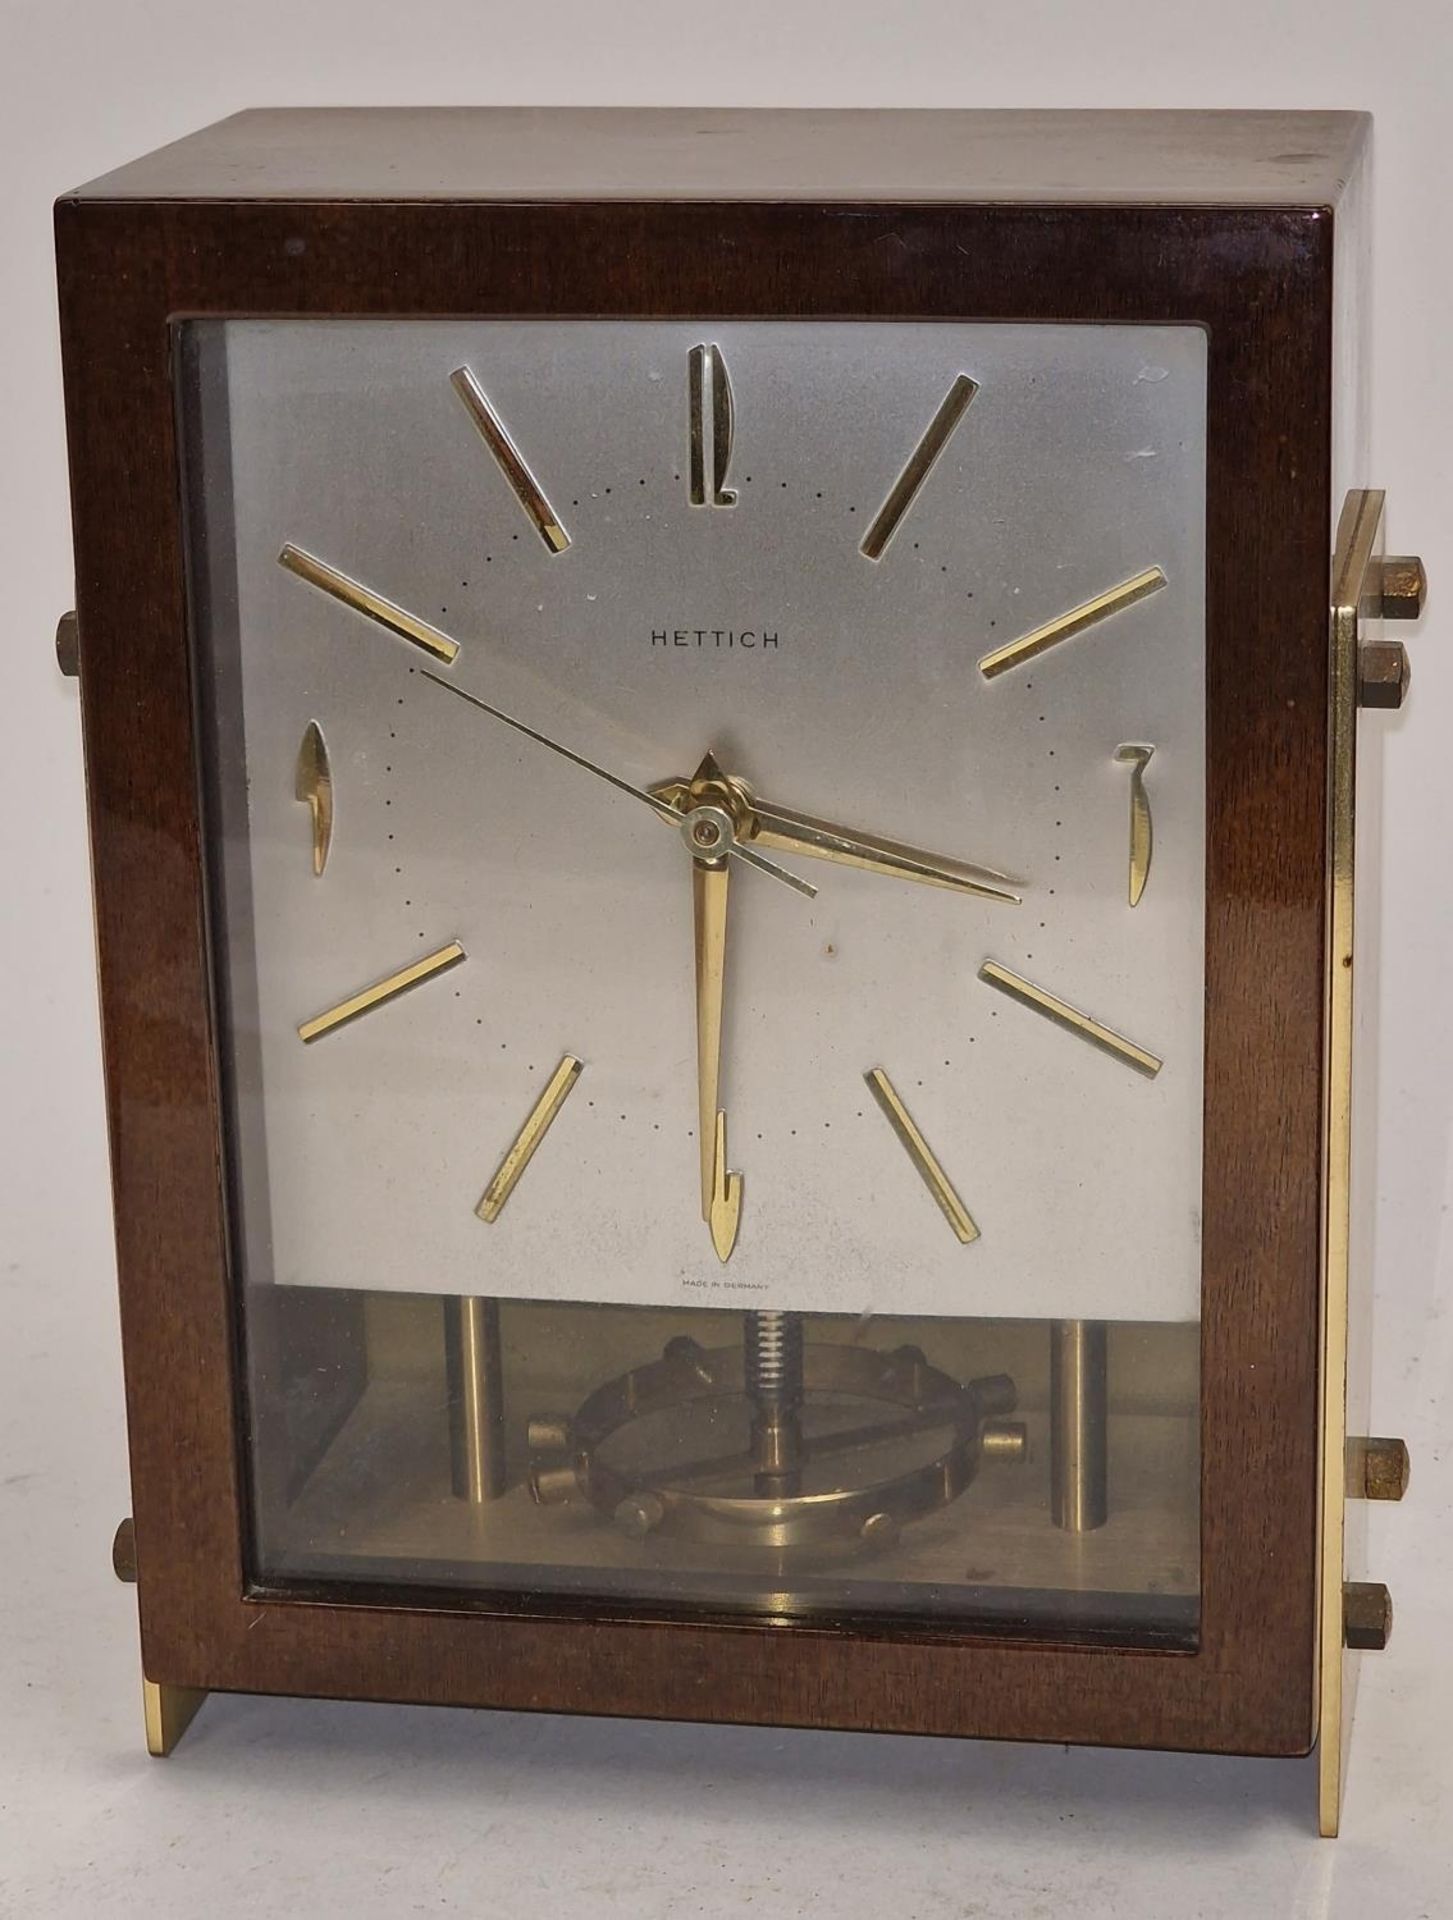 Hettich German mid 20th century vintage table clock 20cm tall.